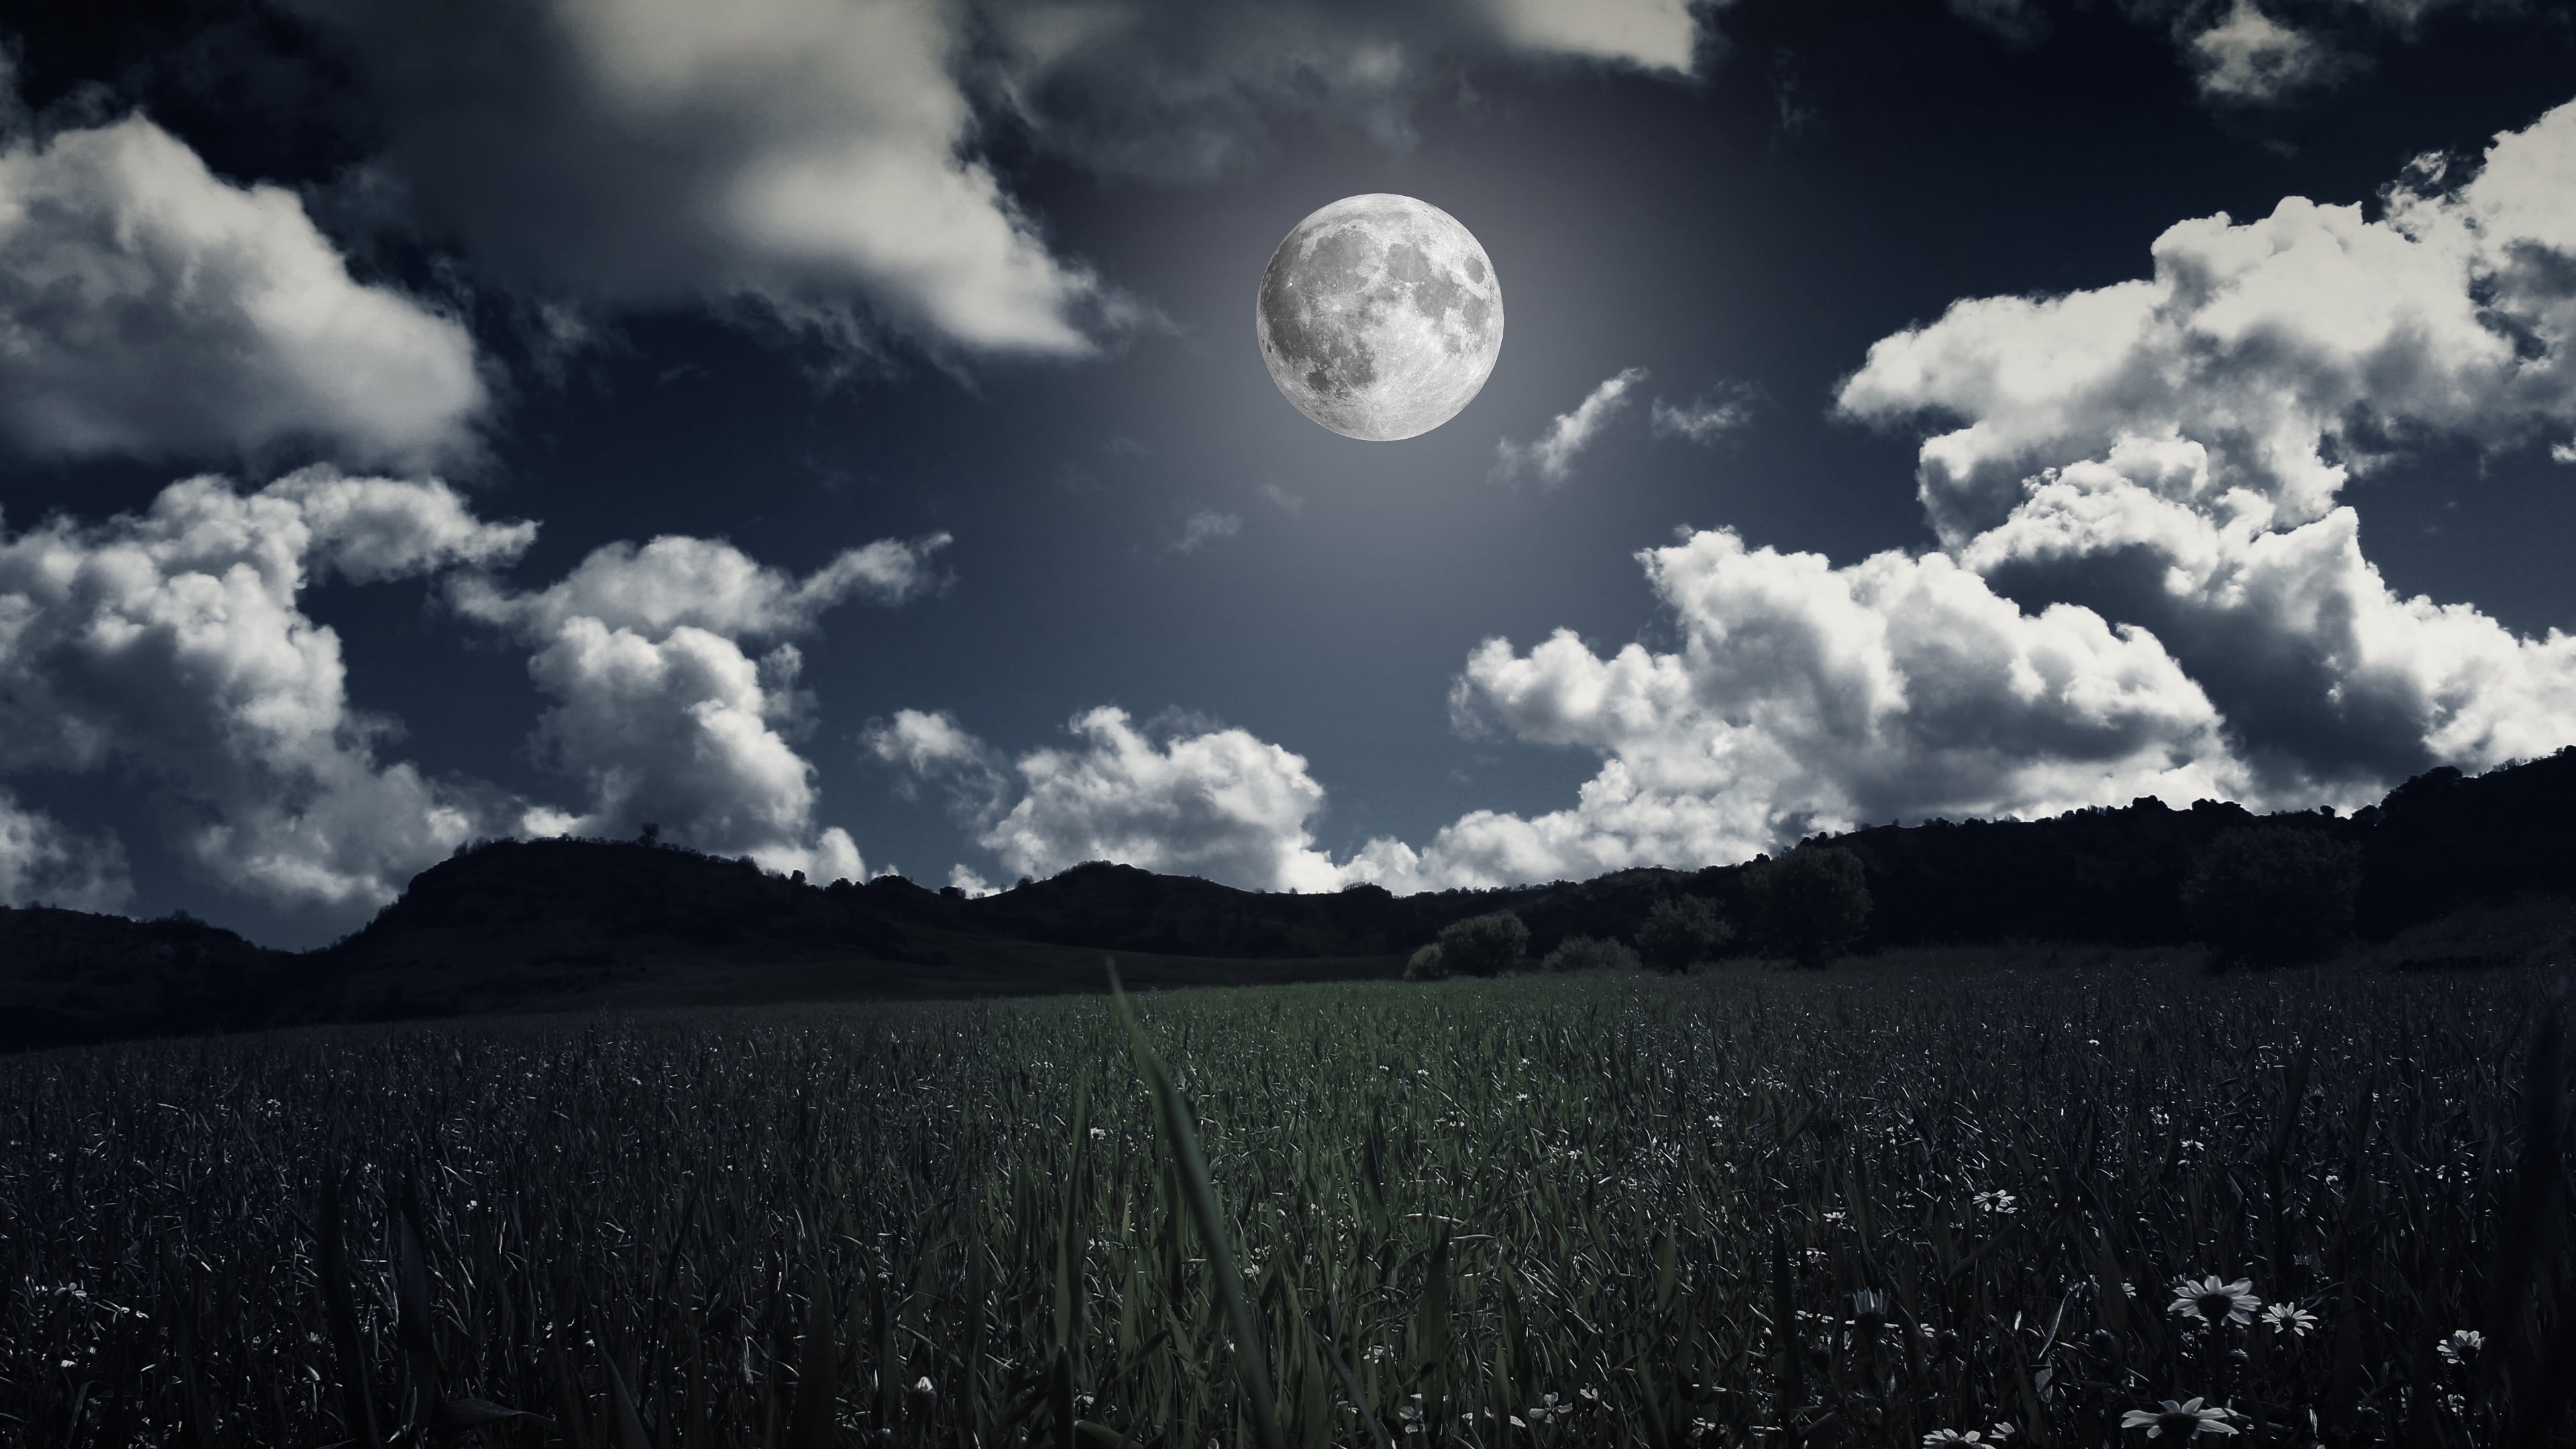 full moon, moonlight, field, night sky, clouds, night landscape